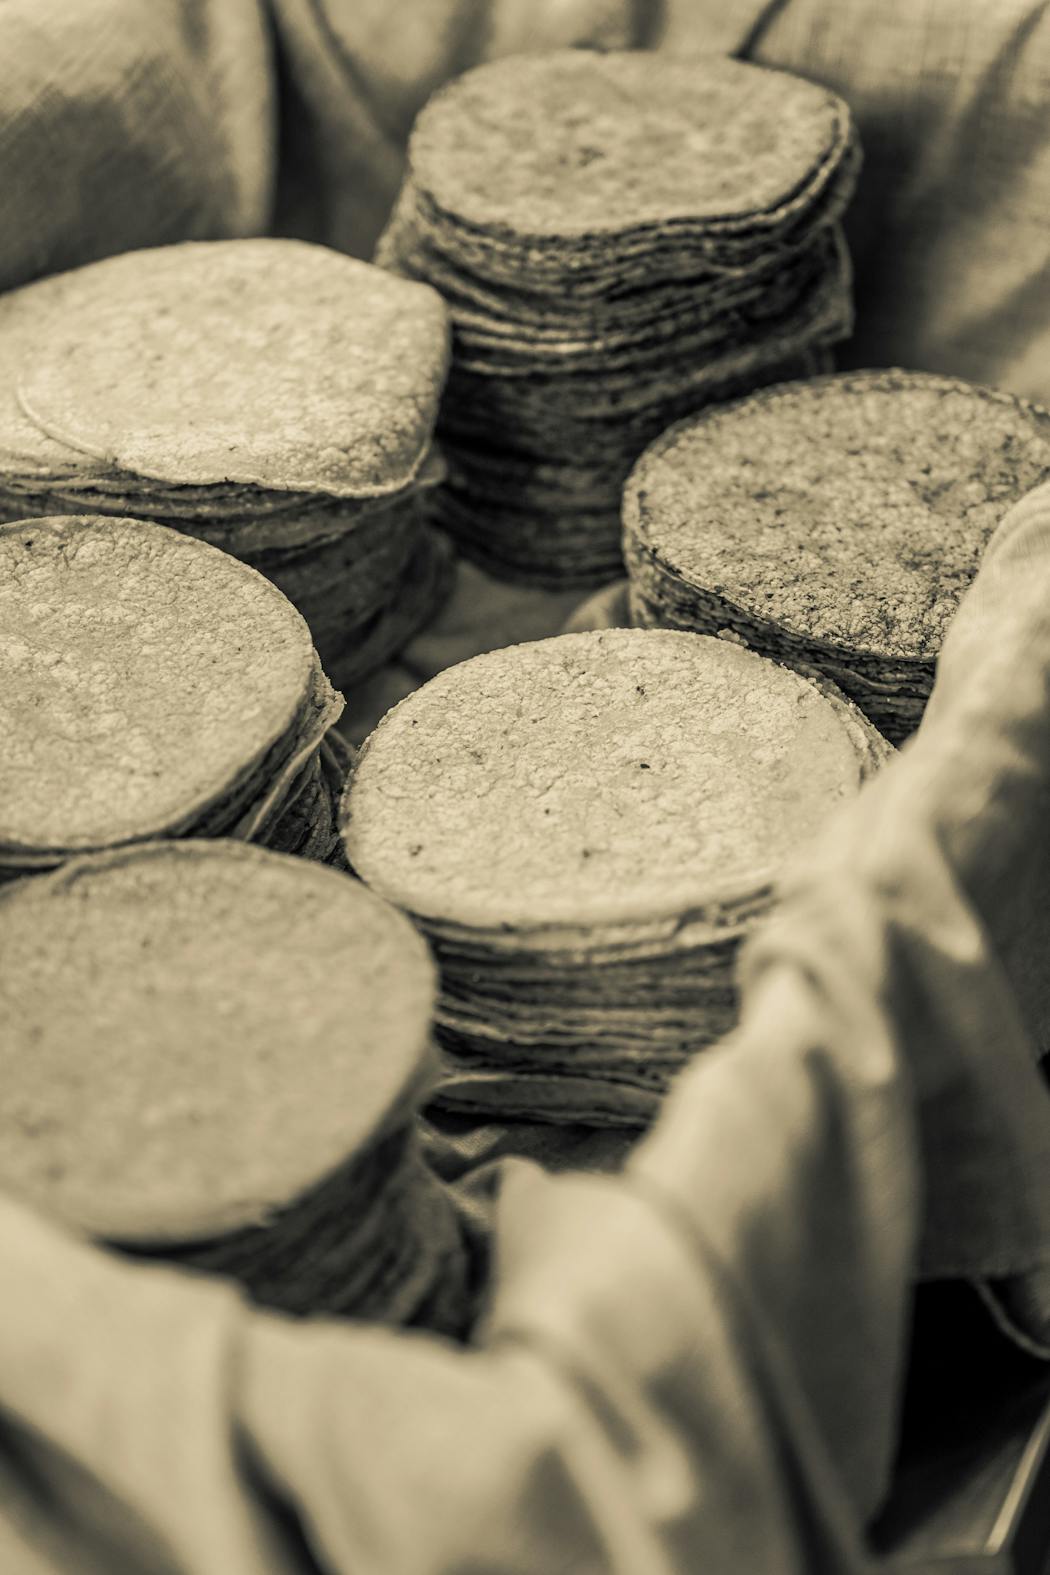 Nixta tortillas lay a solid foundation for tostadas.